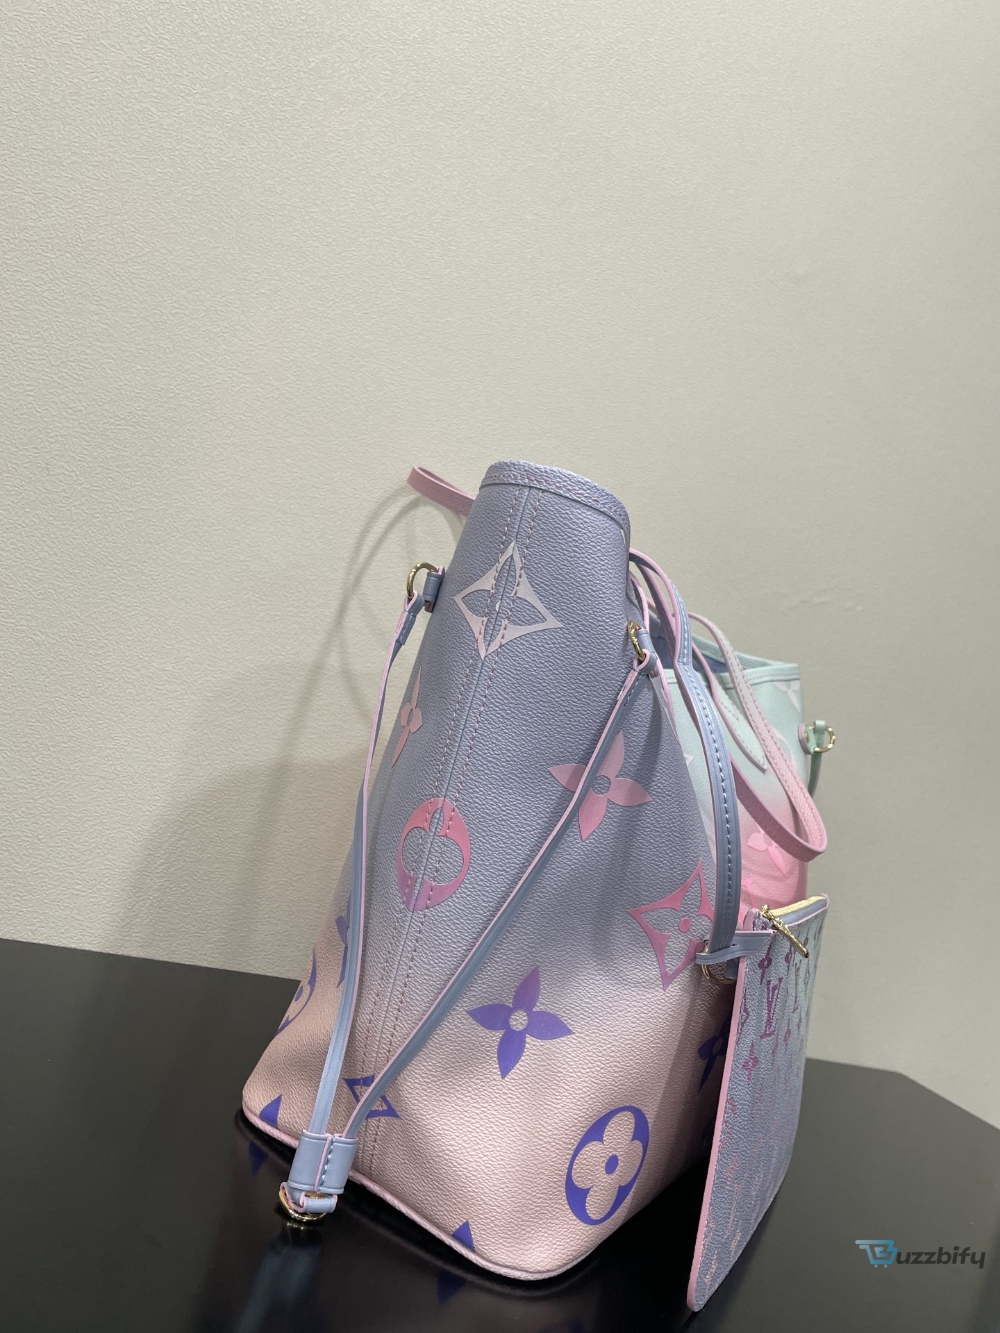 louis vuitton neverfull mm tote bag monogram canvas sunrise pastel for women womens handbags shoulder bags 122in31cm lv m46077 2799 buzzbify 1 65